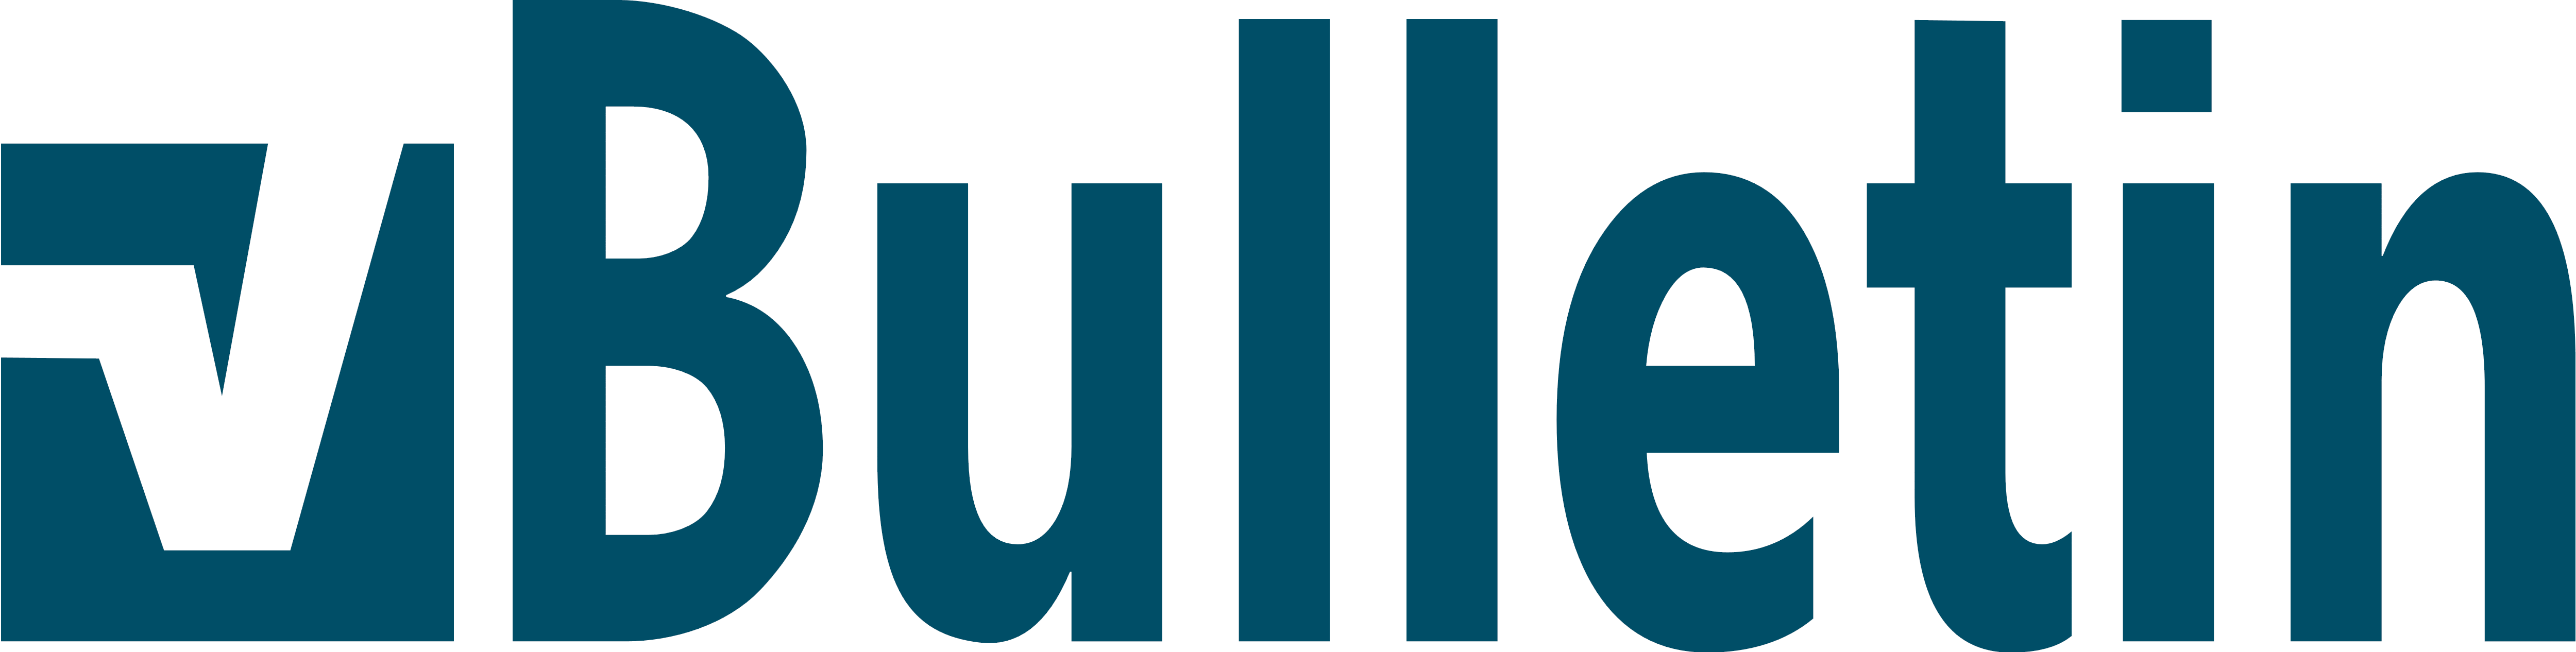 VBulletin_logo.png